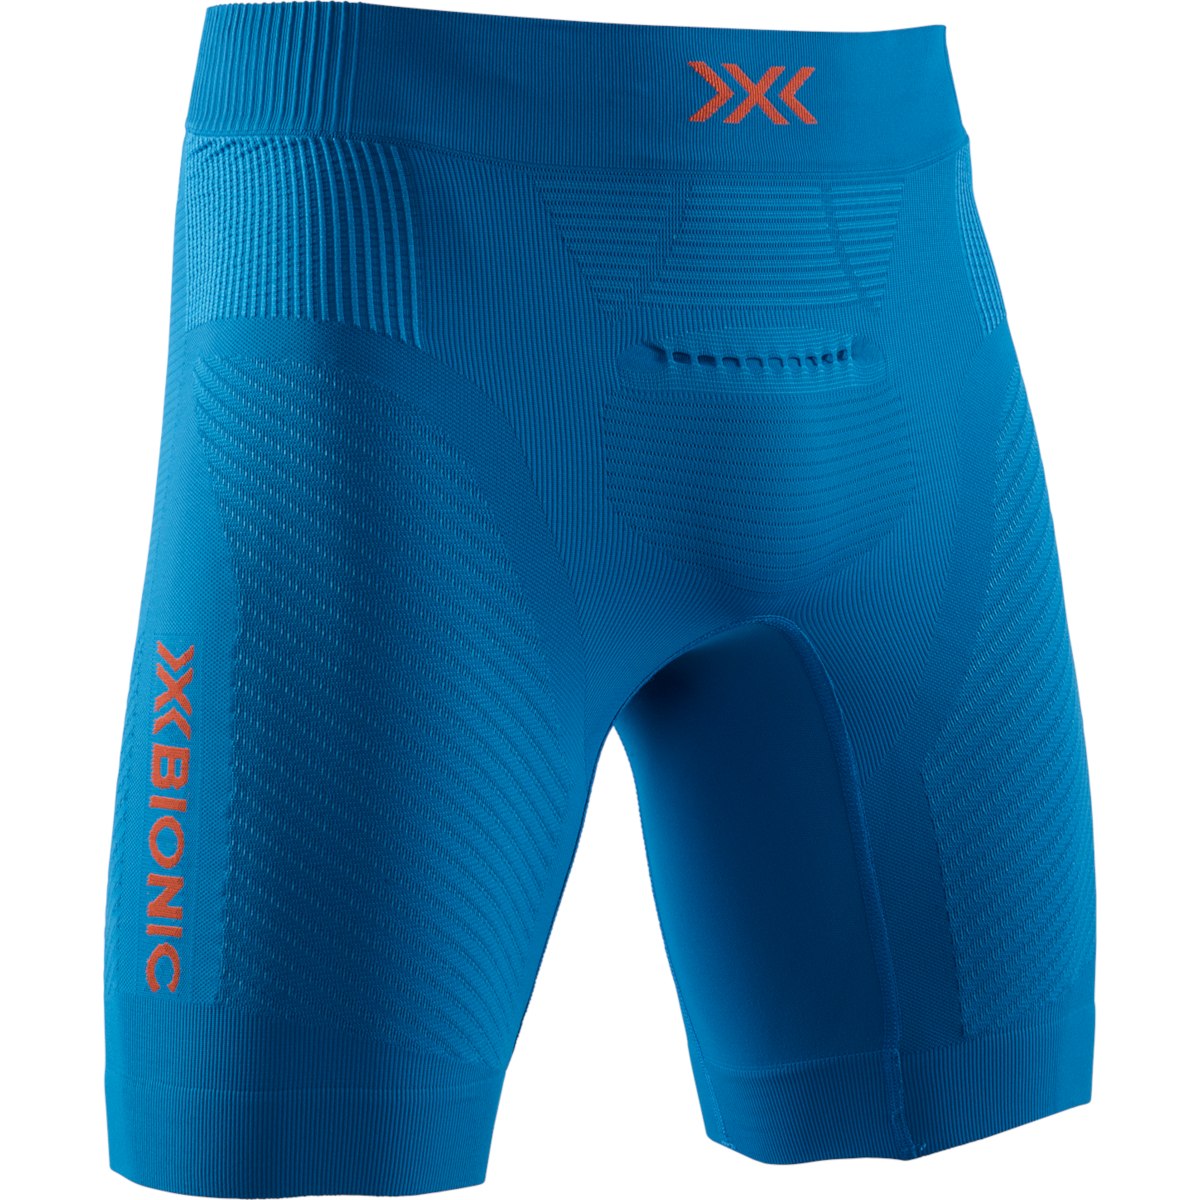 Picture of X-Bionic Invent 4.0 Run Speed Shorts for Men - teal blue/kurkuma orange